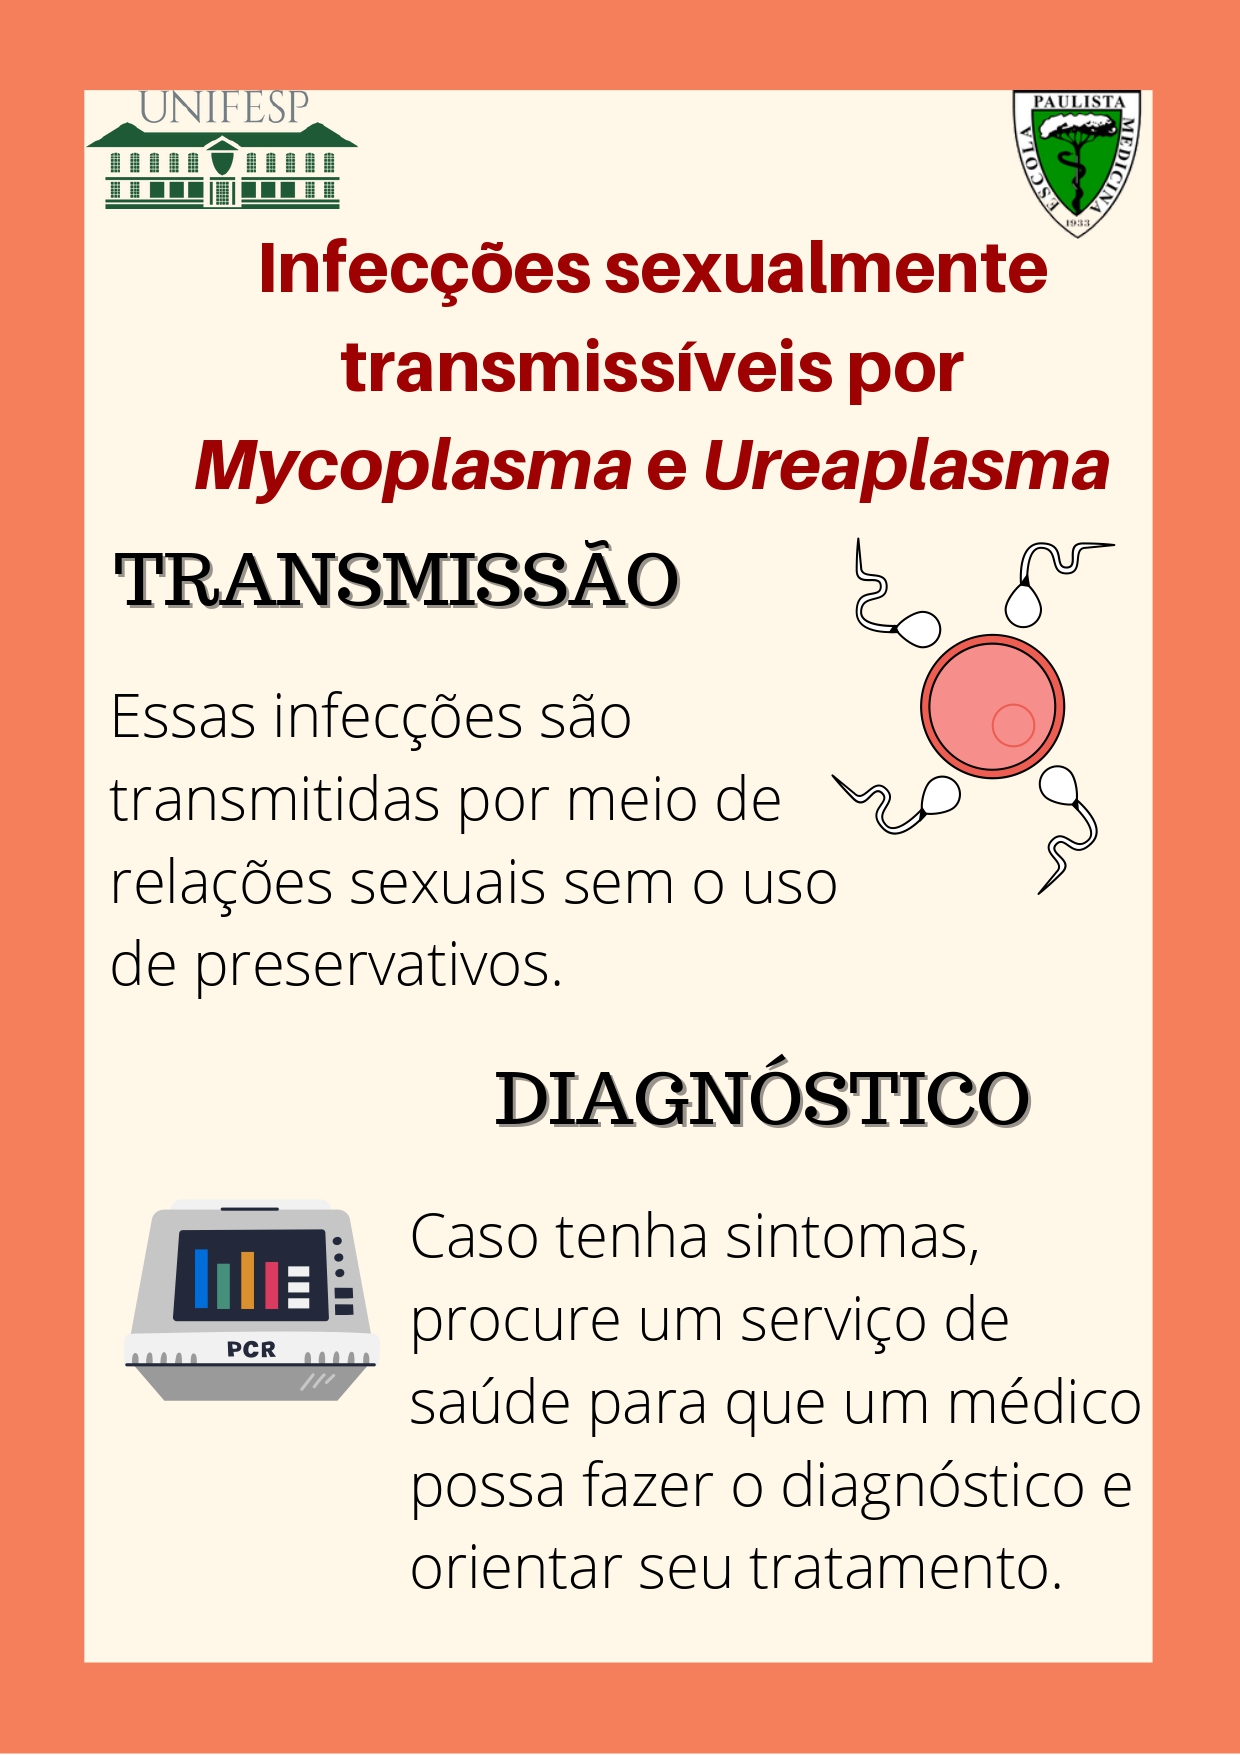 Mycoplasma e Ureaplasma page 0004